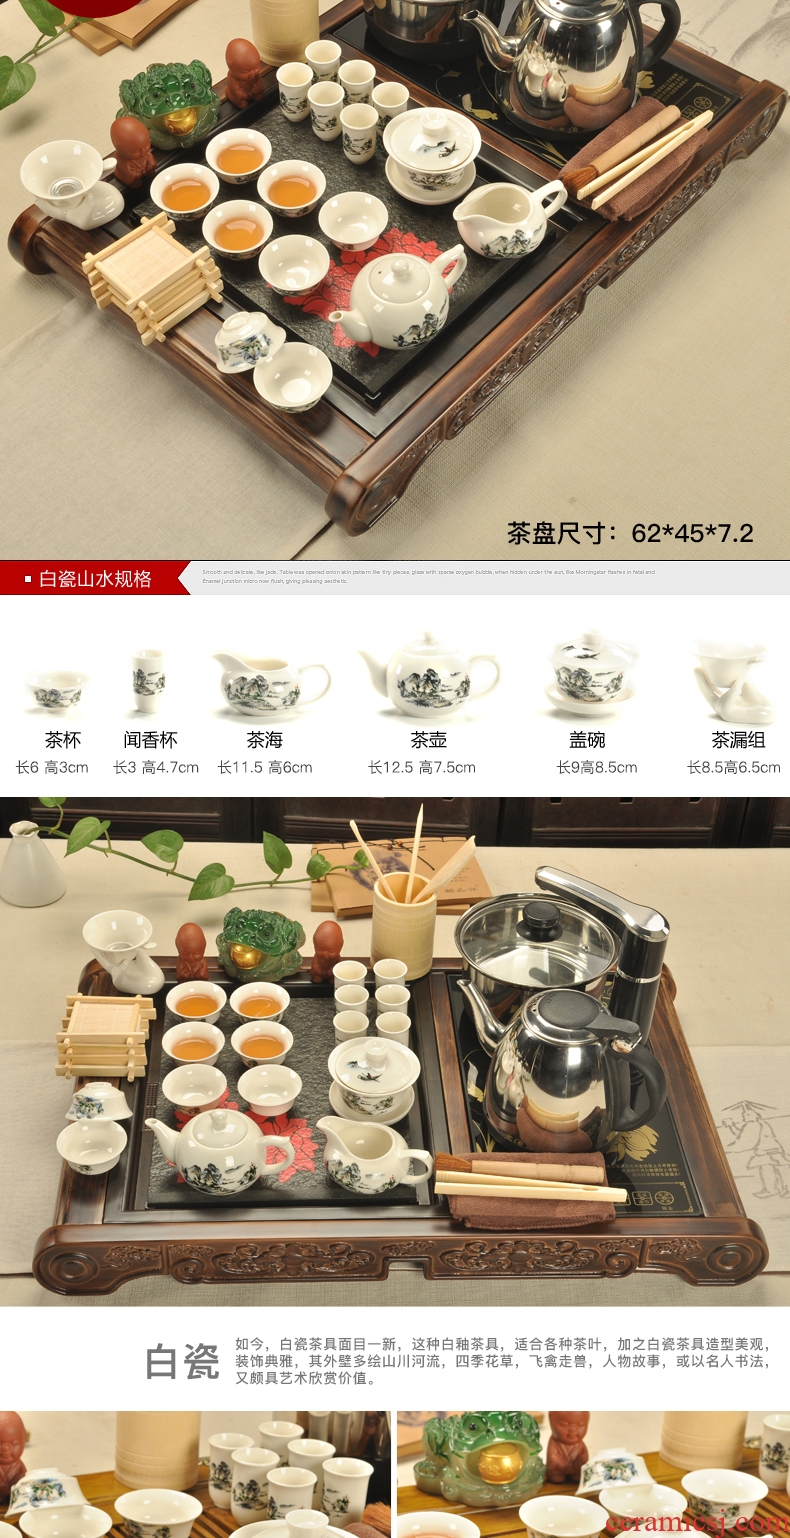 The cabinet of household ceramic teapot teacup kung fu tea set solid wood tea tray four unity tea tea set electric heating furnace